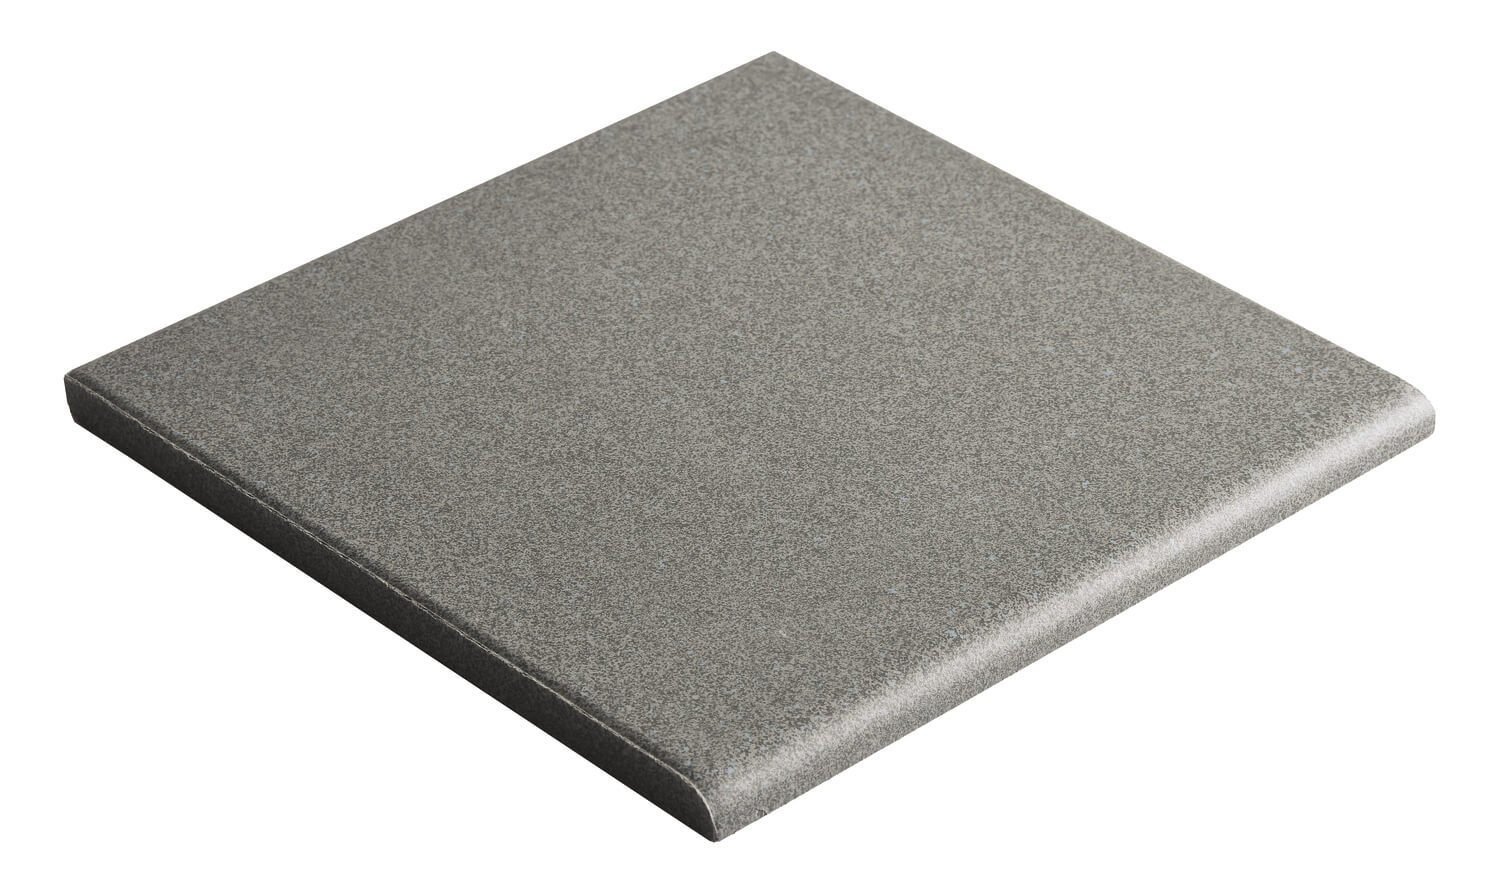 Dorset Woolliscroft Dark Grey Round Edge Slip Resistant Quarry Tile 148x148mm